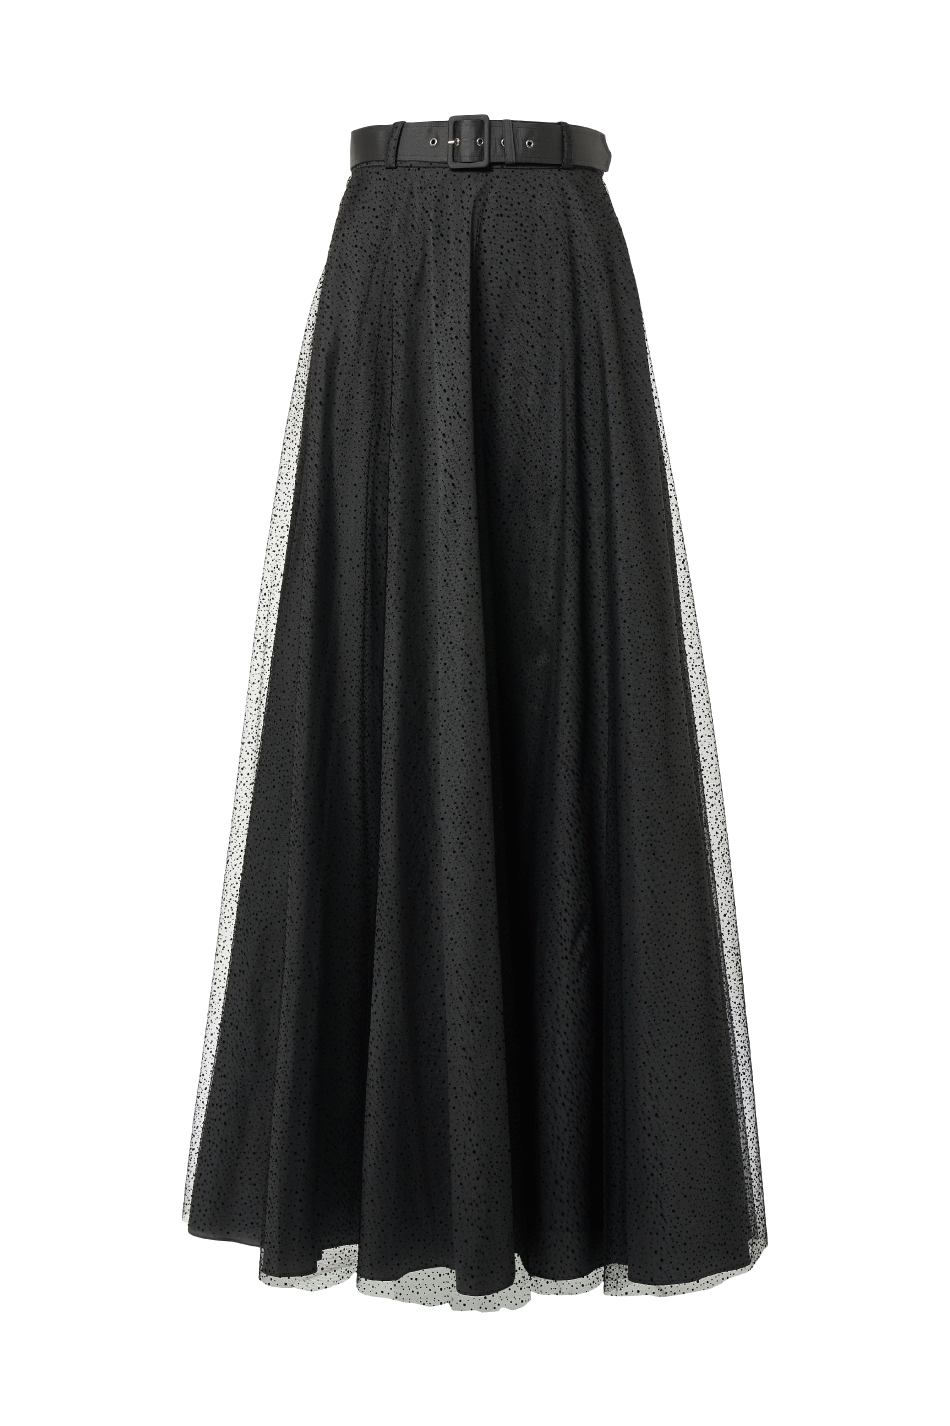 LOOK 12 (Skirt)